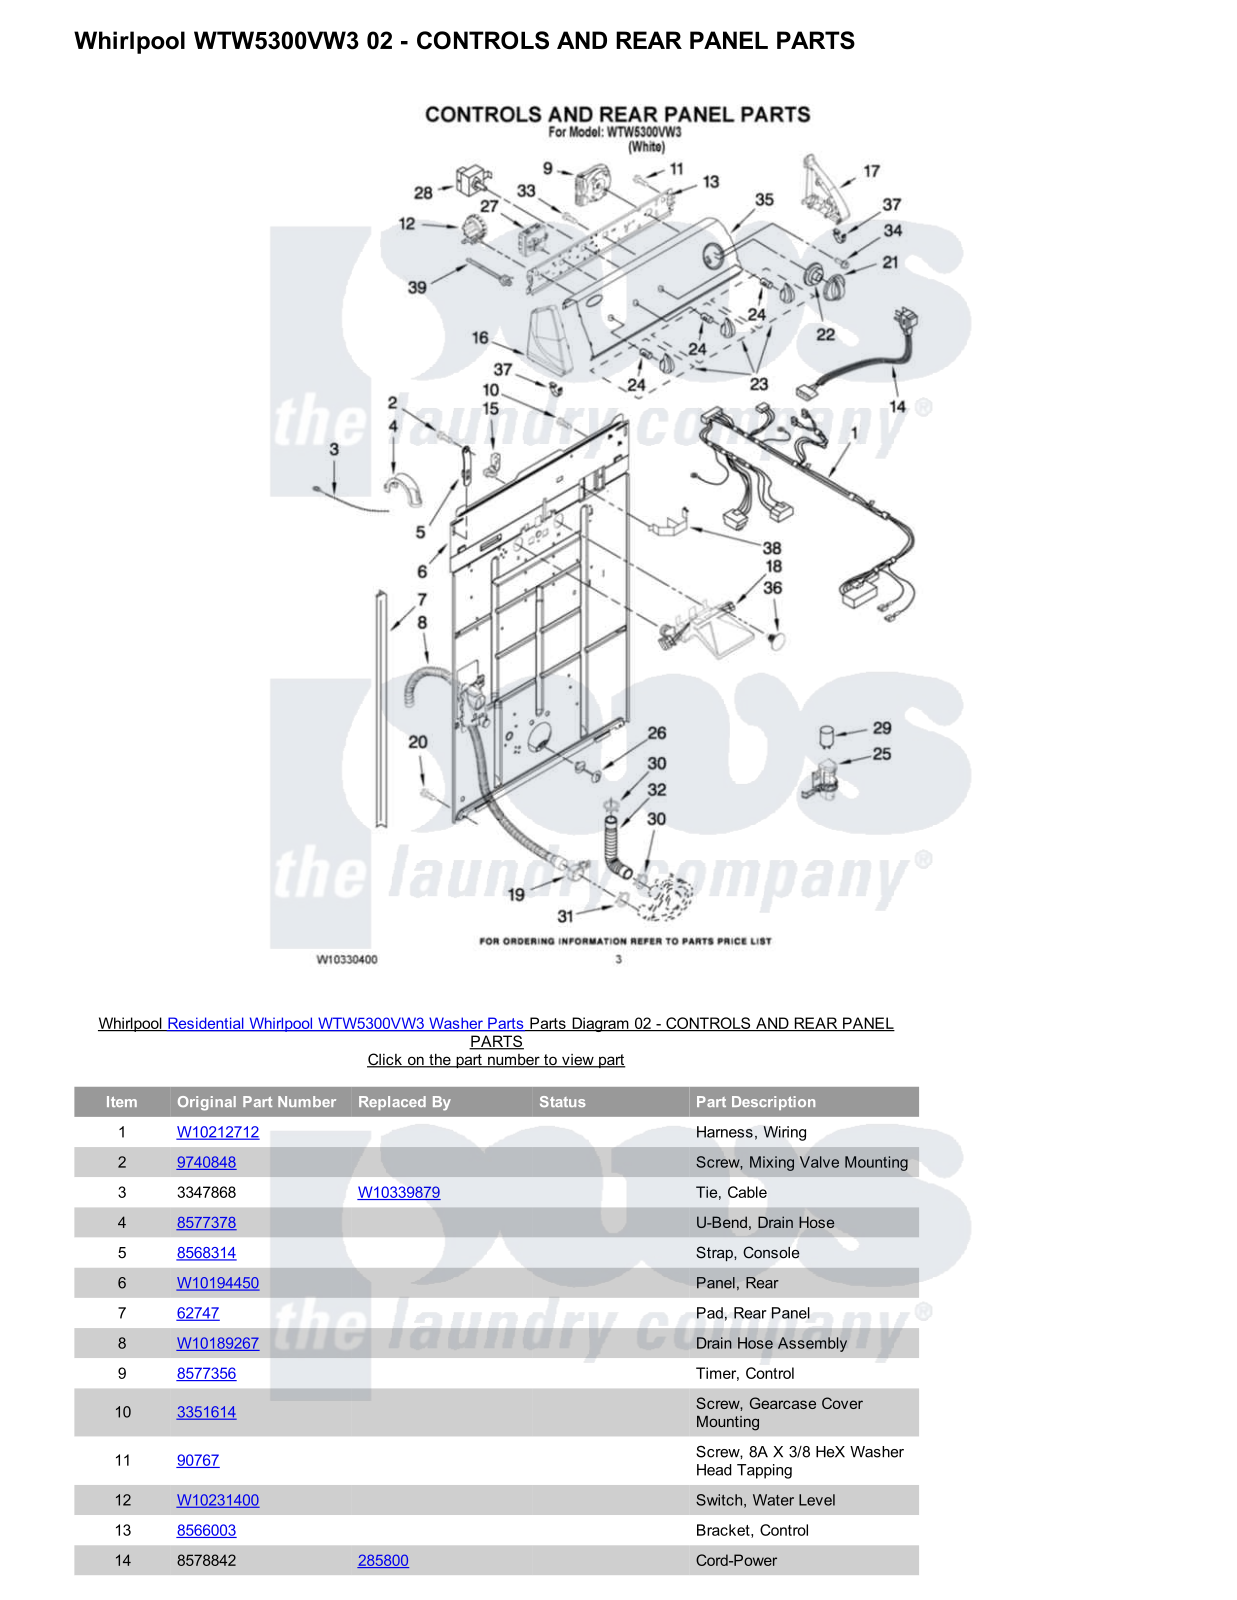 Whirlpool WTW5300VW3 Parts Diagram